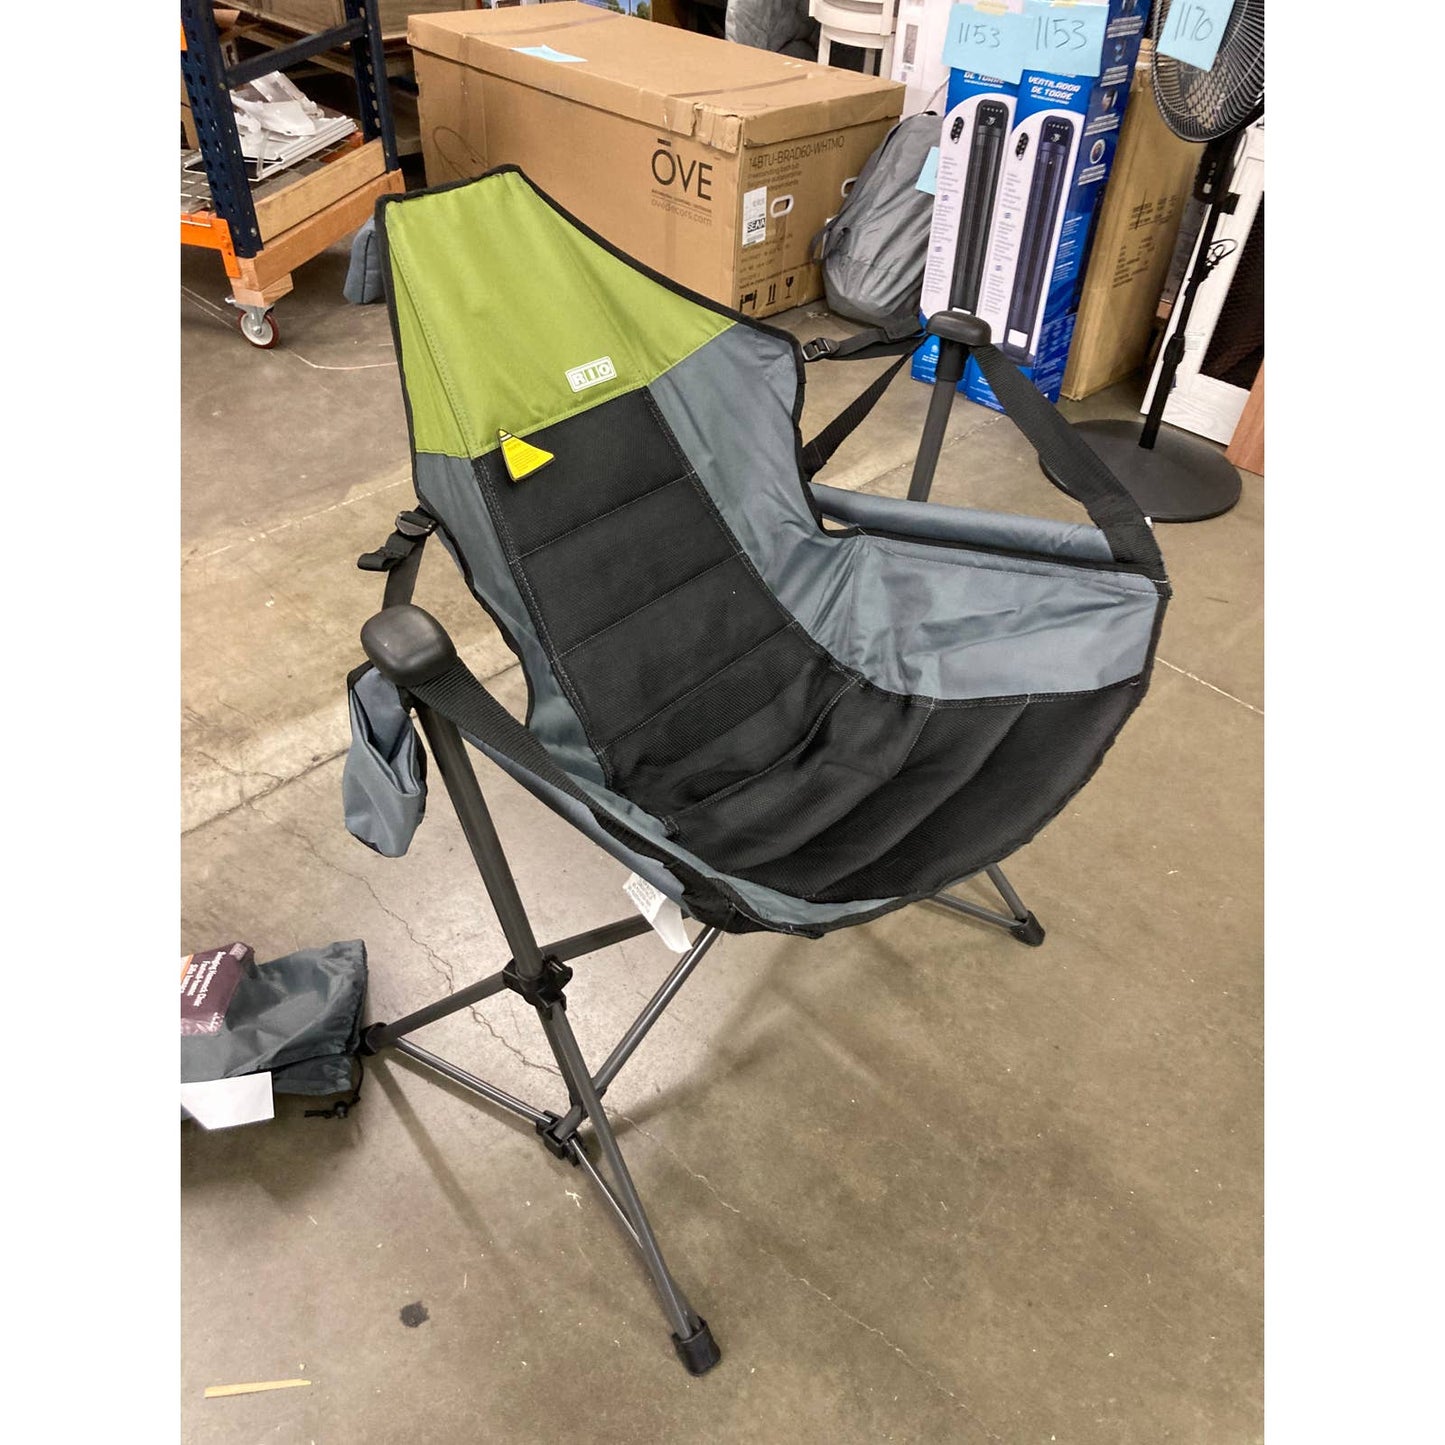 Costco - RIO Swinging Hammock Chair - Retail $59